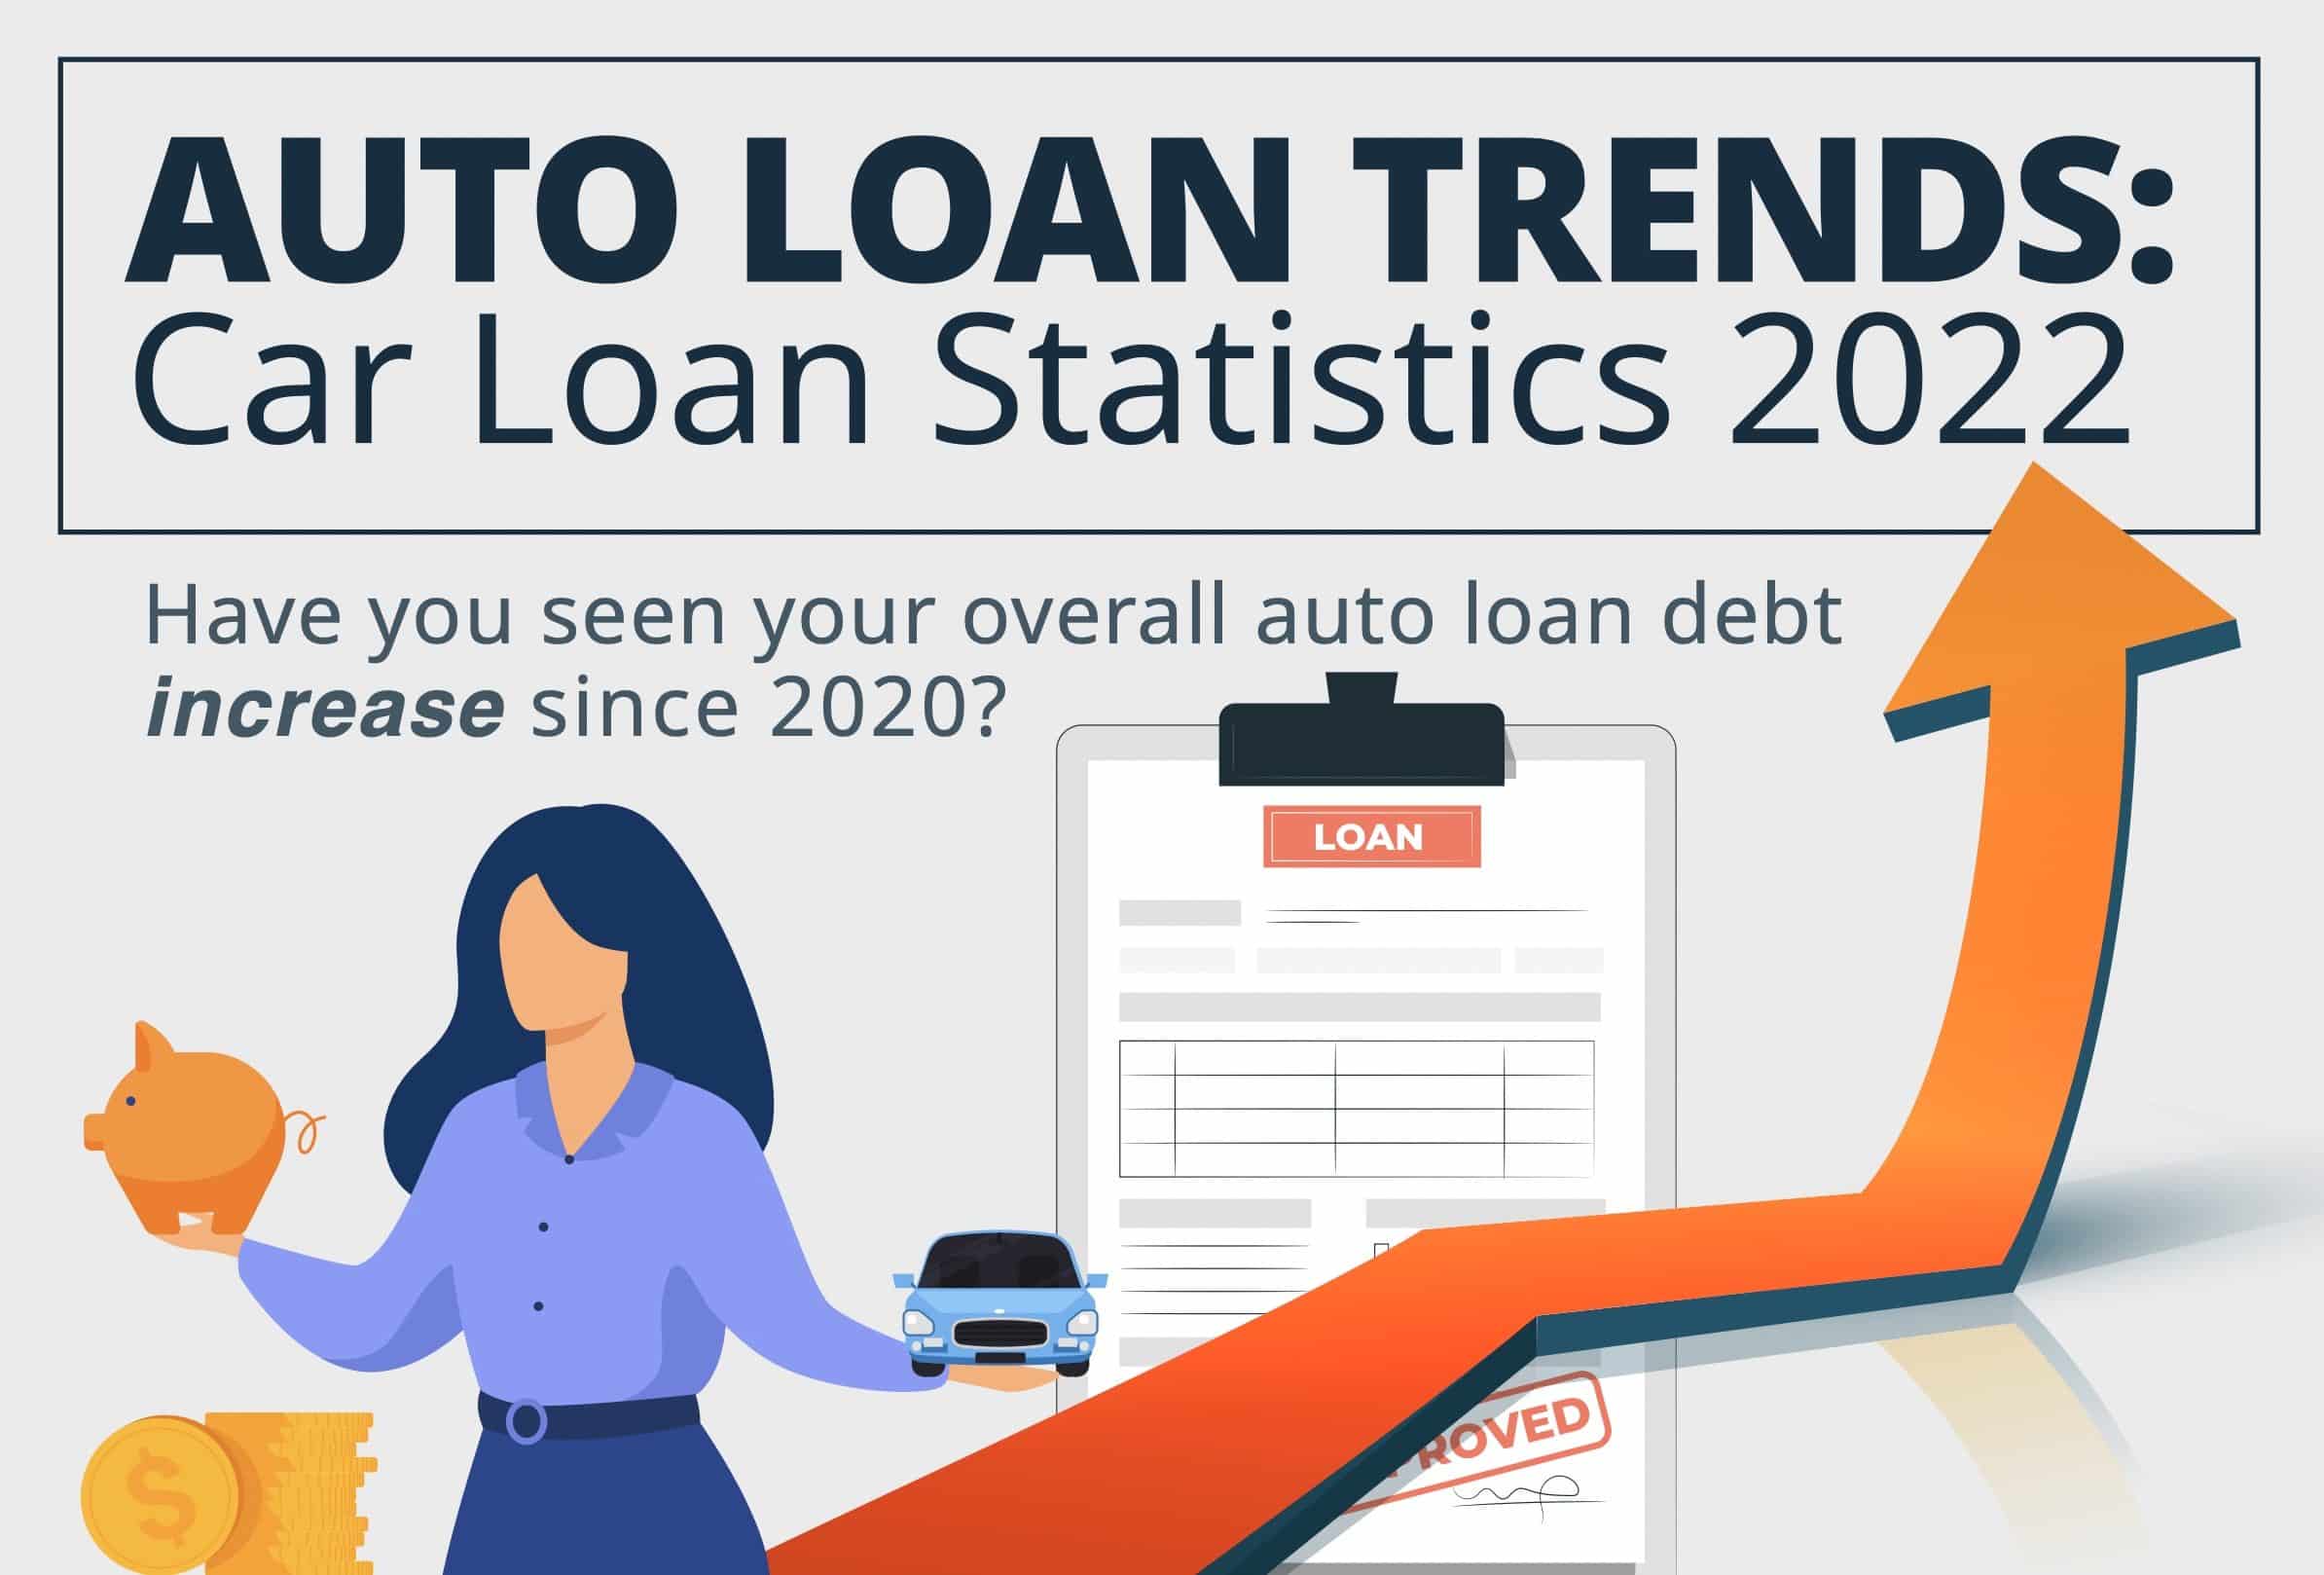 Auto Loan Trends Car Loan Statistics 2022 Featured Image